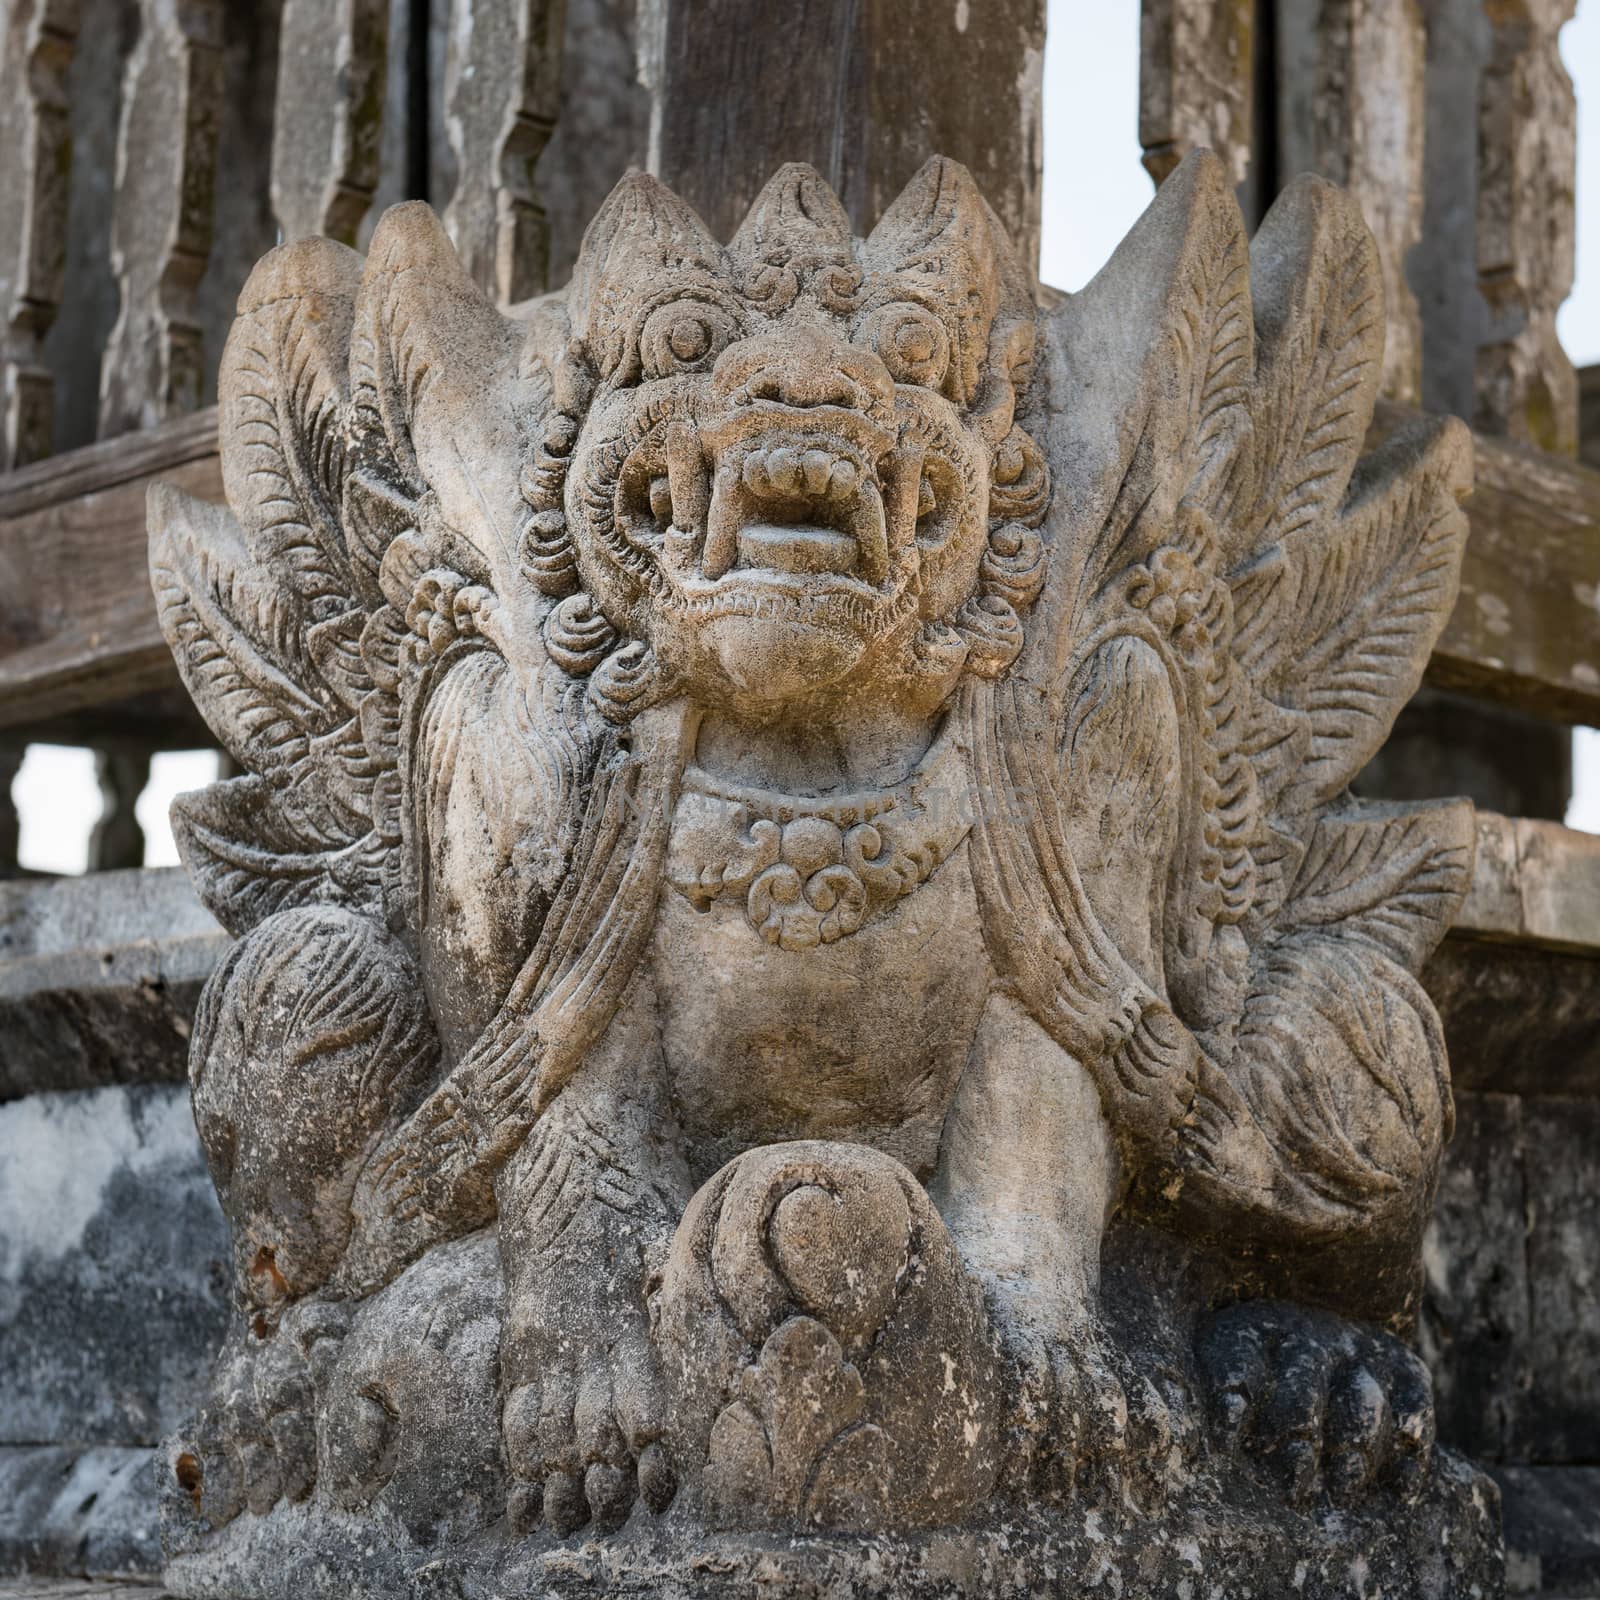 Balinese demon statue by iryna_rasko